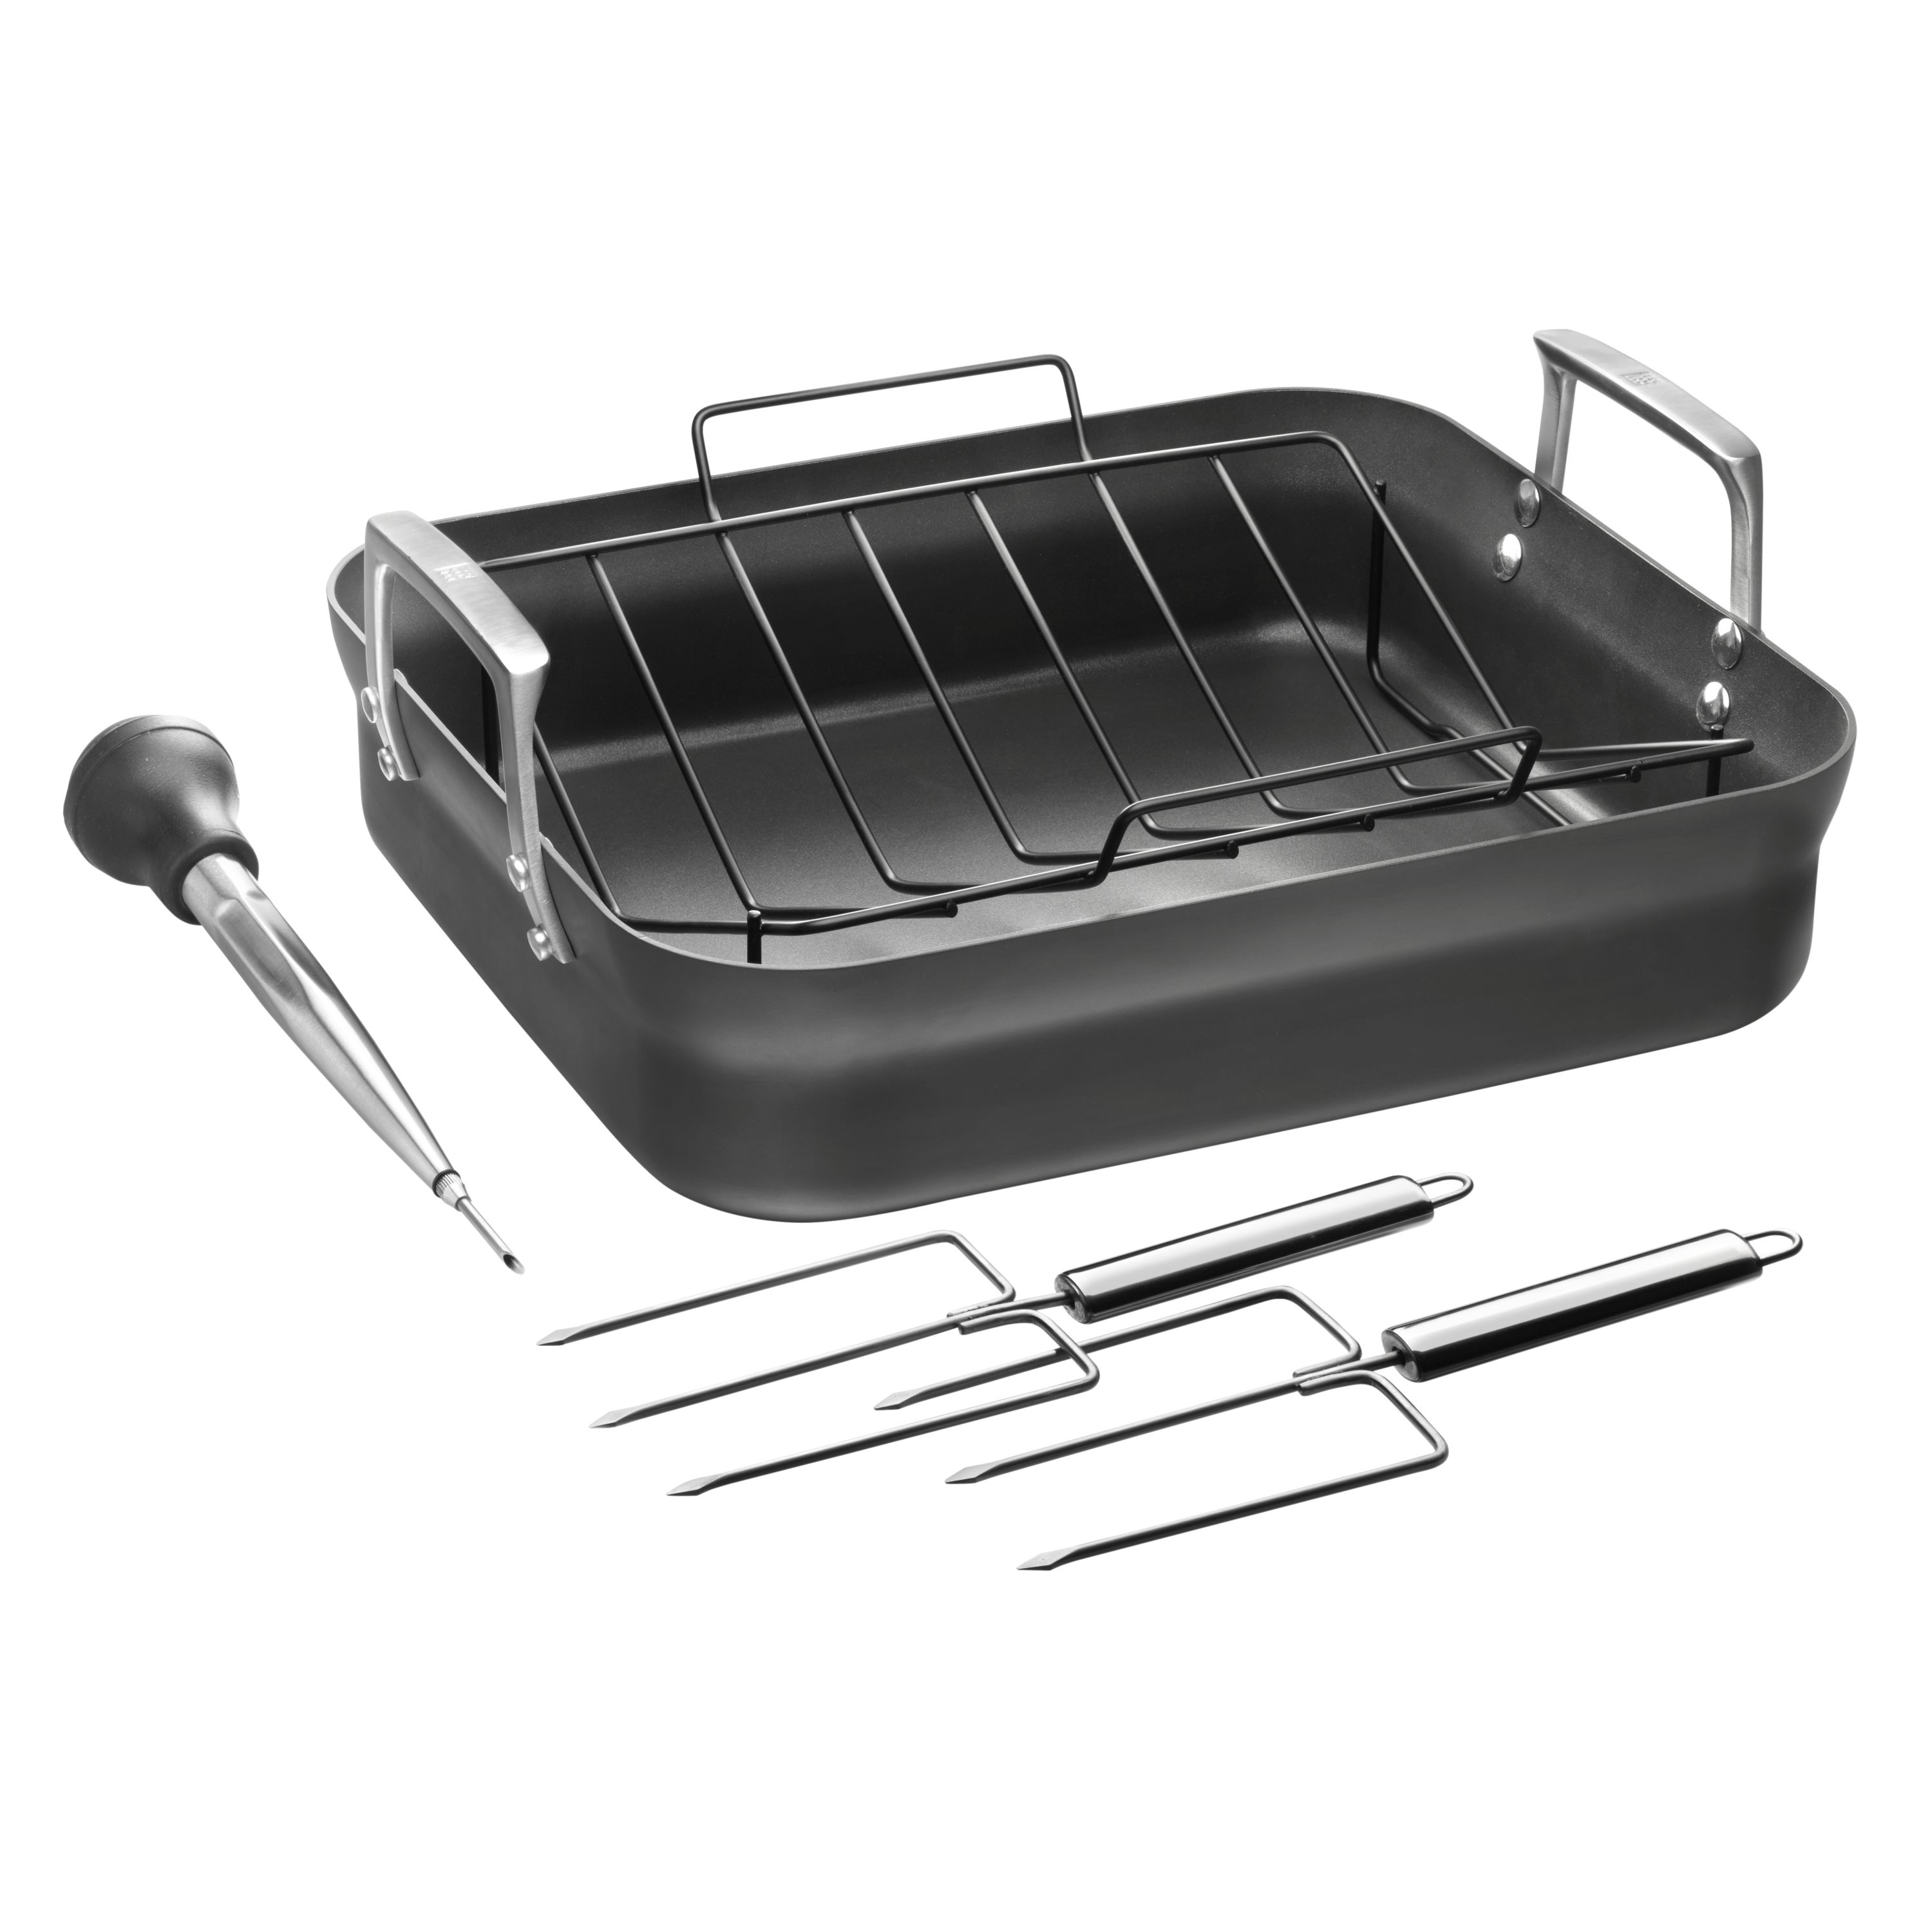 Roasting pan with multi-purpose lid (38 cm) - Zwilling